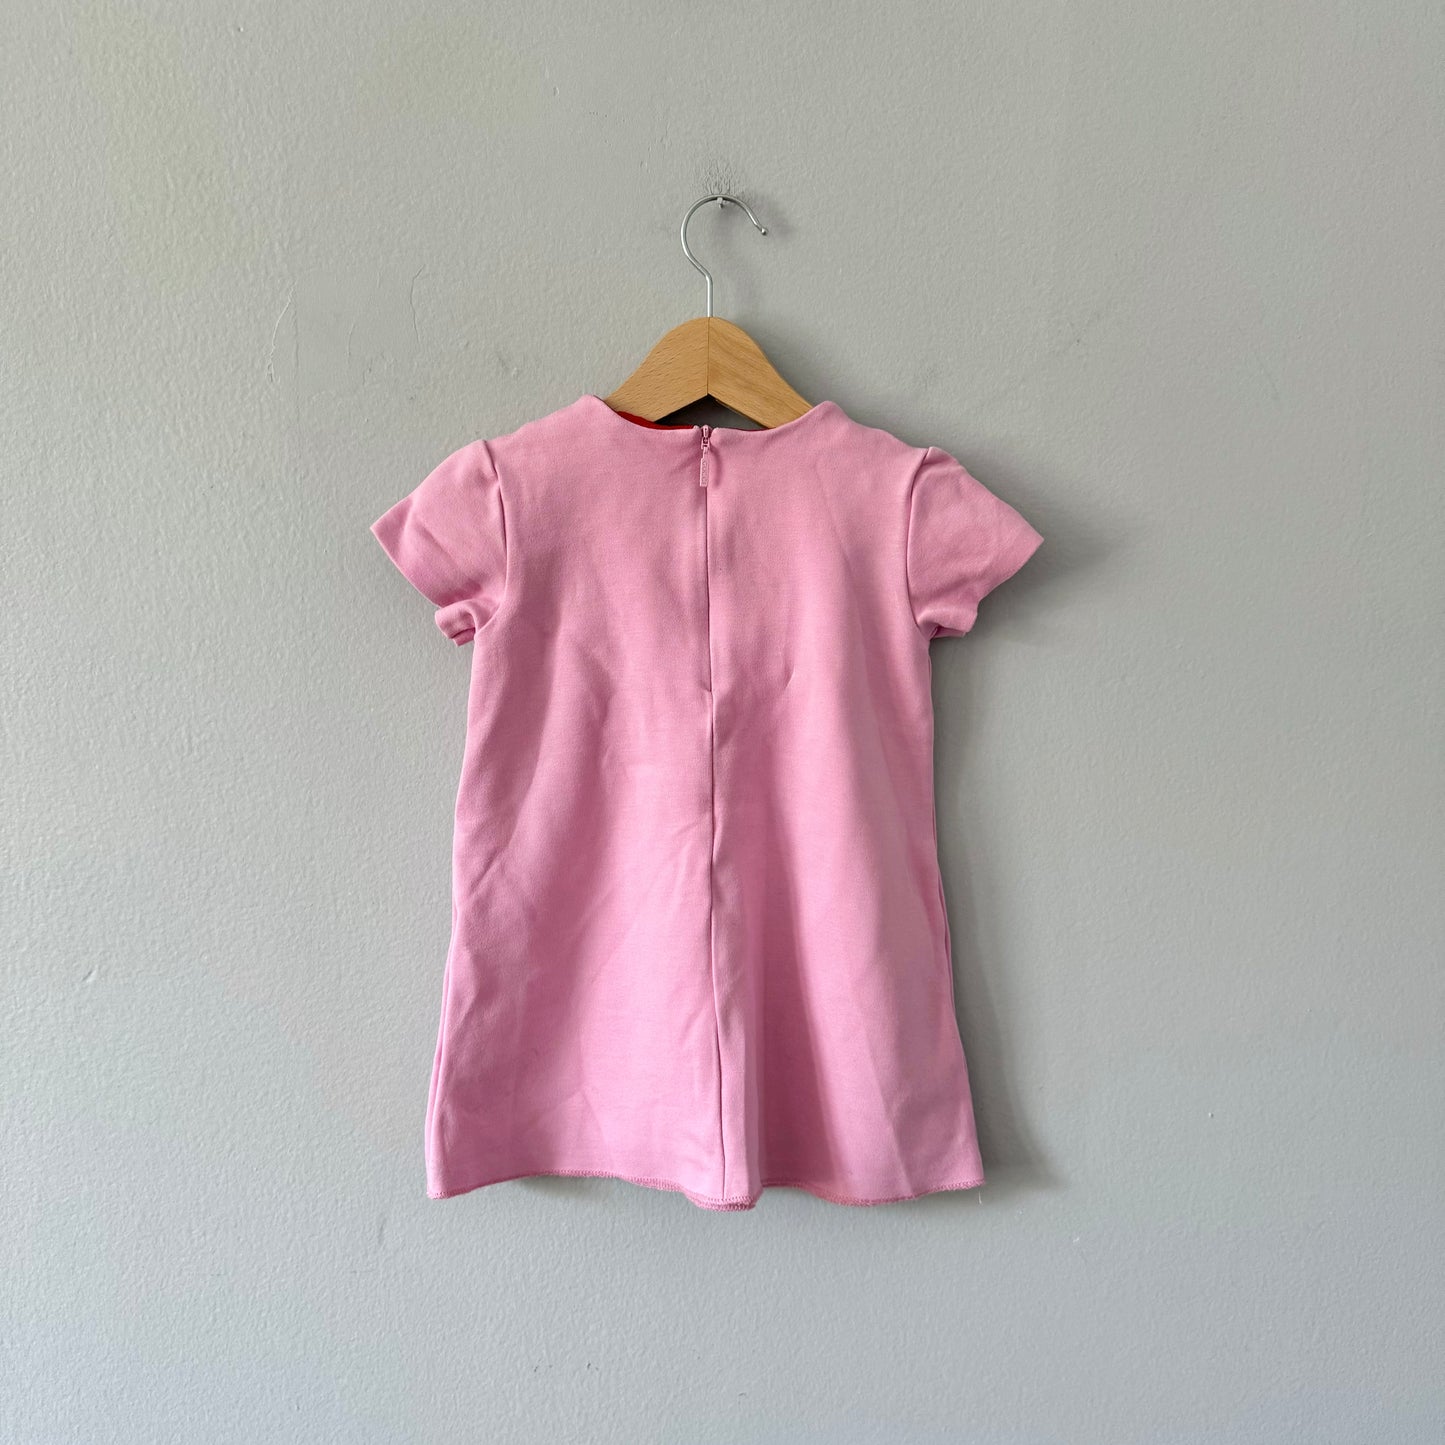 Gucci / Pink dress / 18-24M